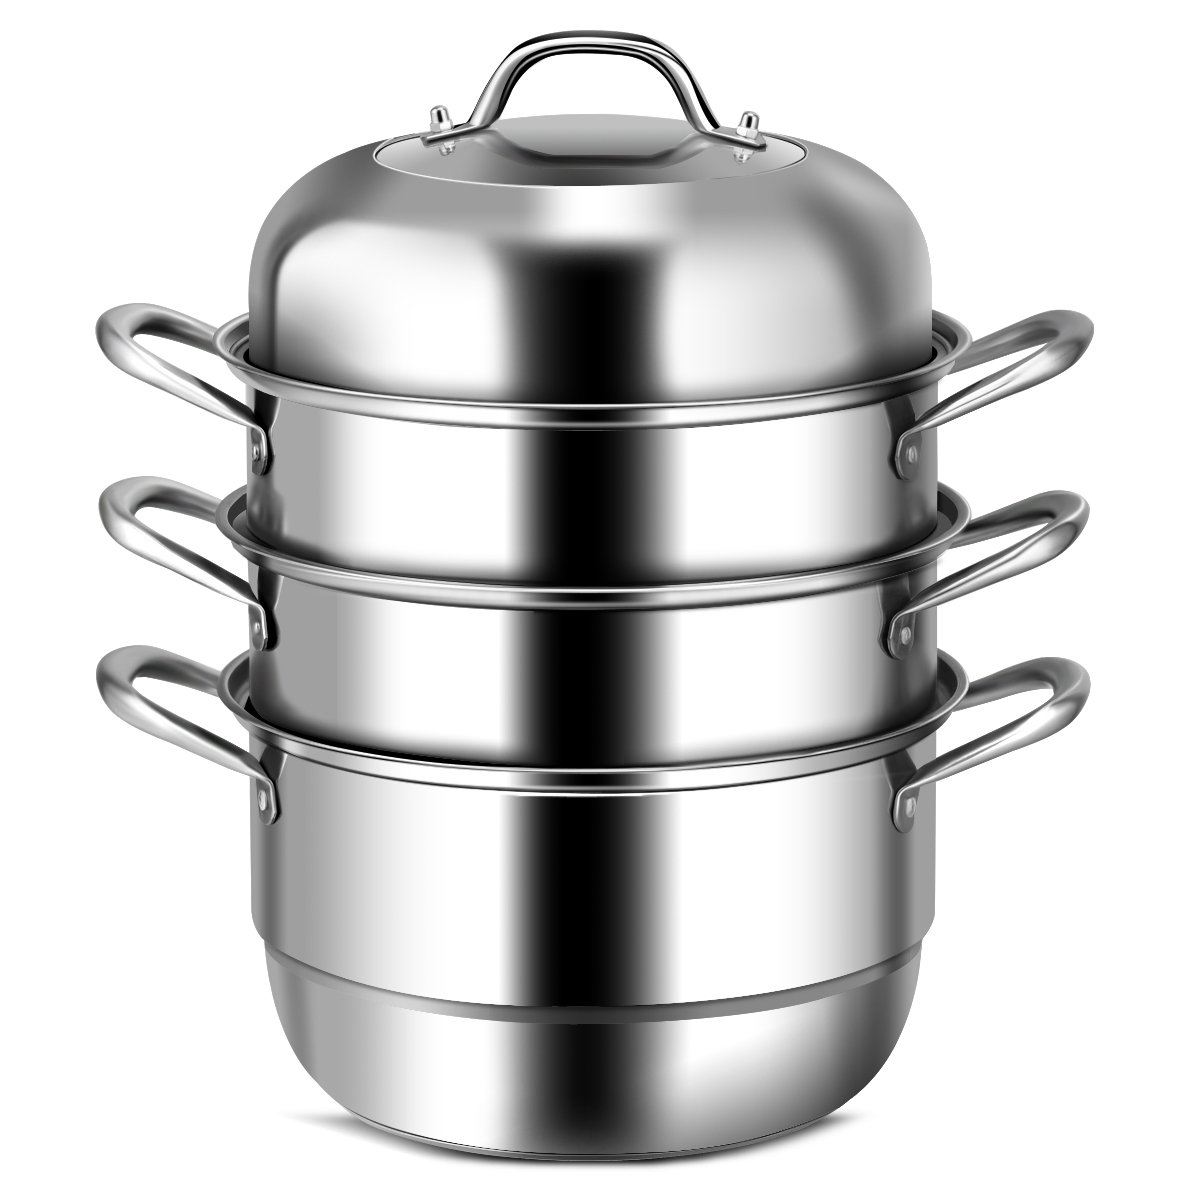 Costway 3 Tier 11 Inch Stainless Steel Steamer Set Cookware Pot Saucepot Double Boiler